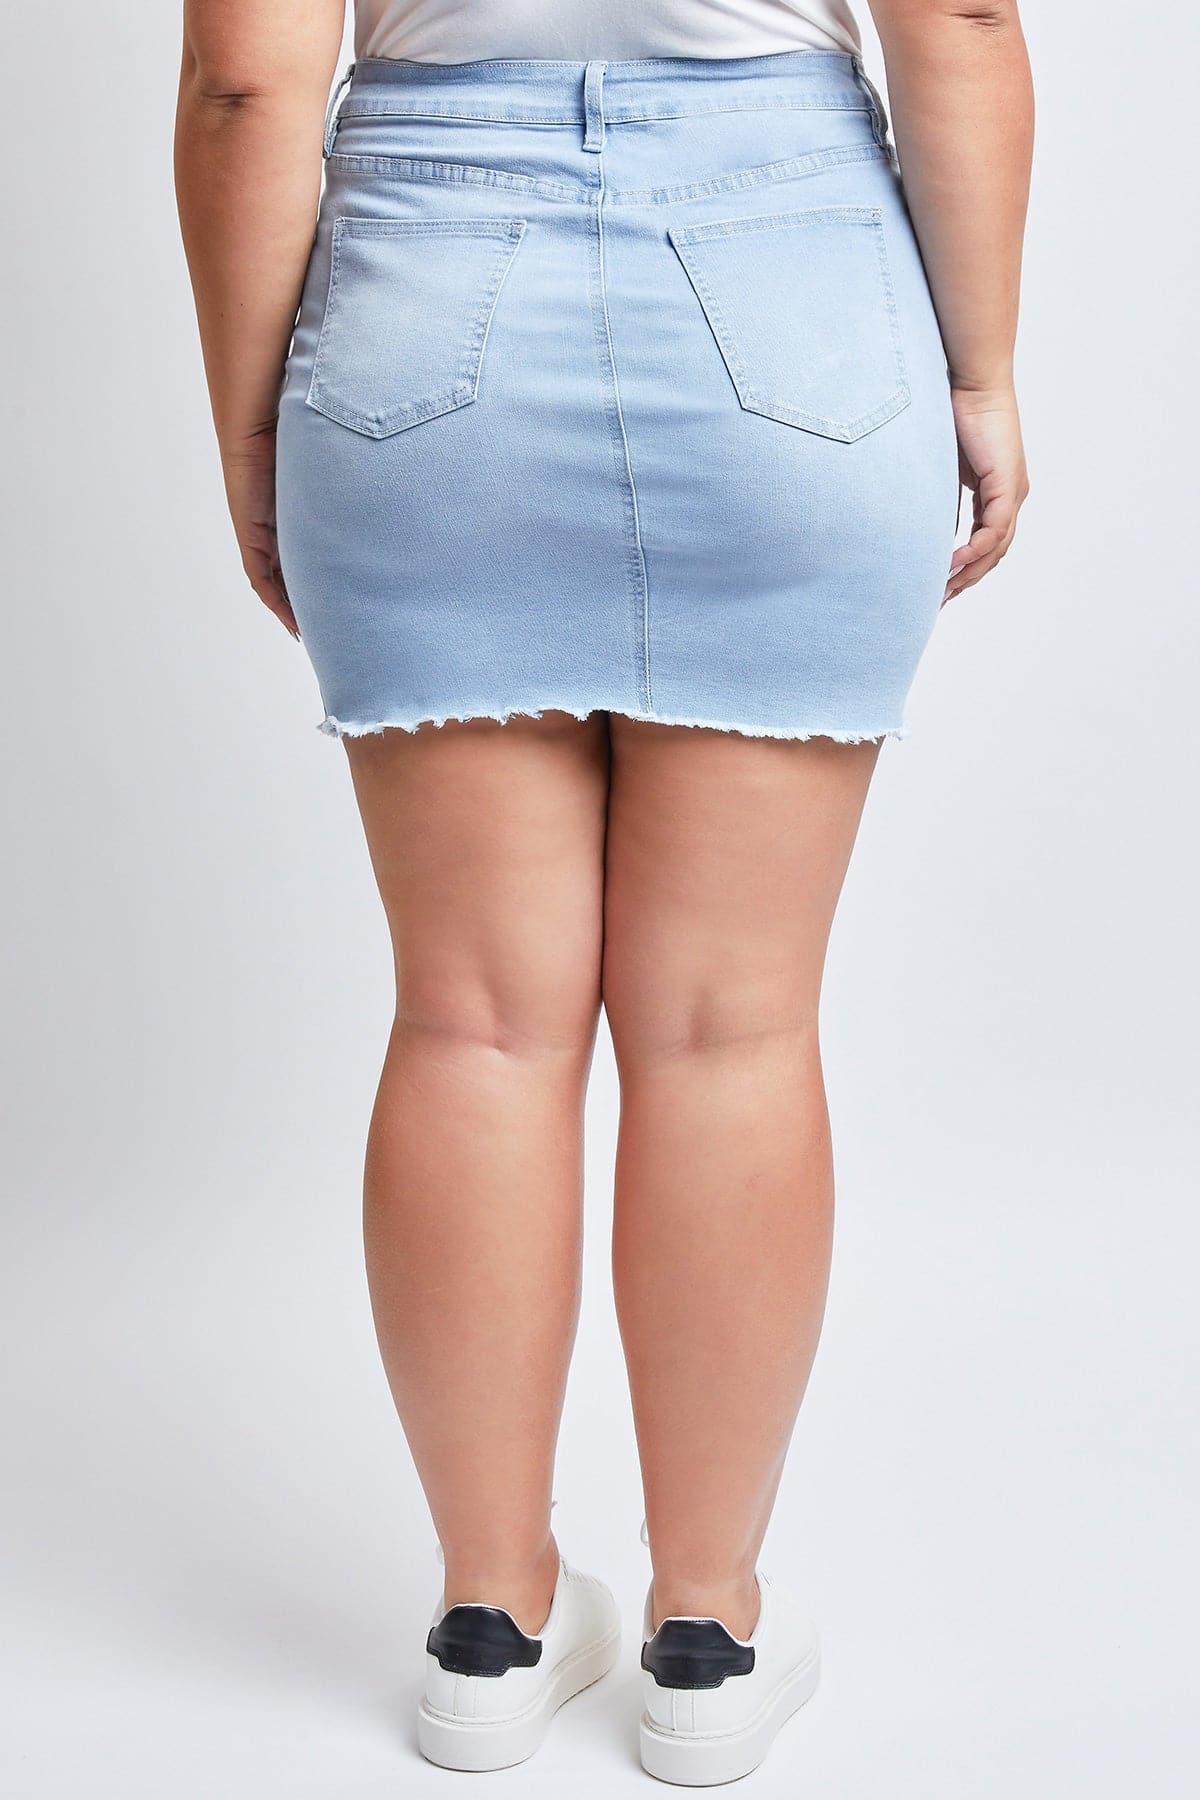 Women's Plus Size Exposed Button Fray Hem Skirt